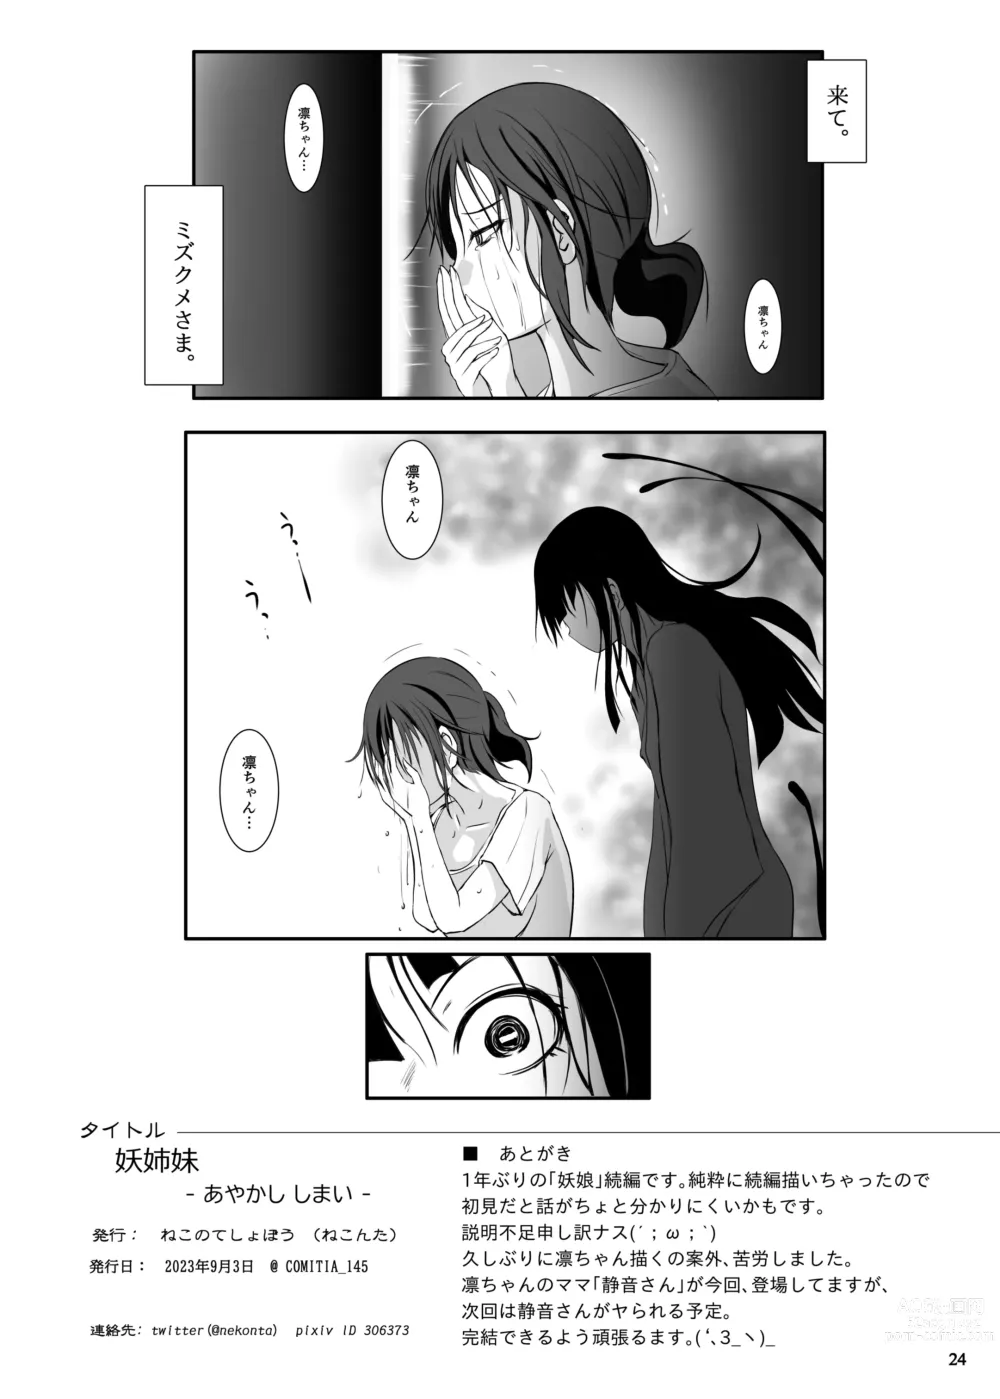 Page 25 of doujinshi Ayakashi Shimai -Ayakashi Shimai-